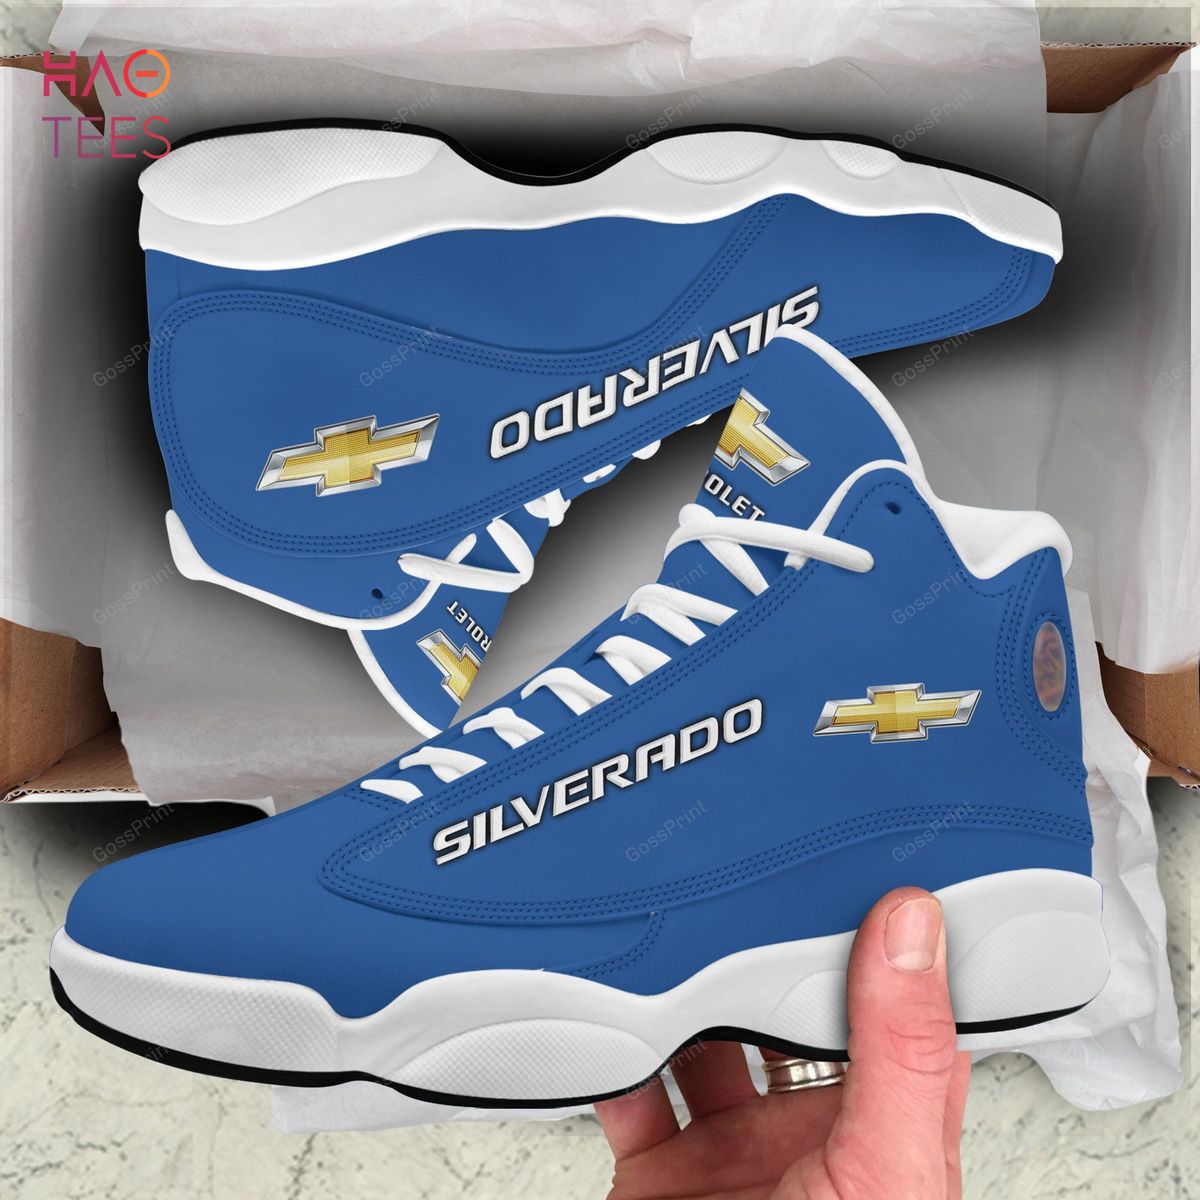 Chevrolet Silverado Air Jordan 13 Blue Shoes, Sneaker POD Design